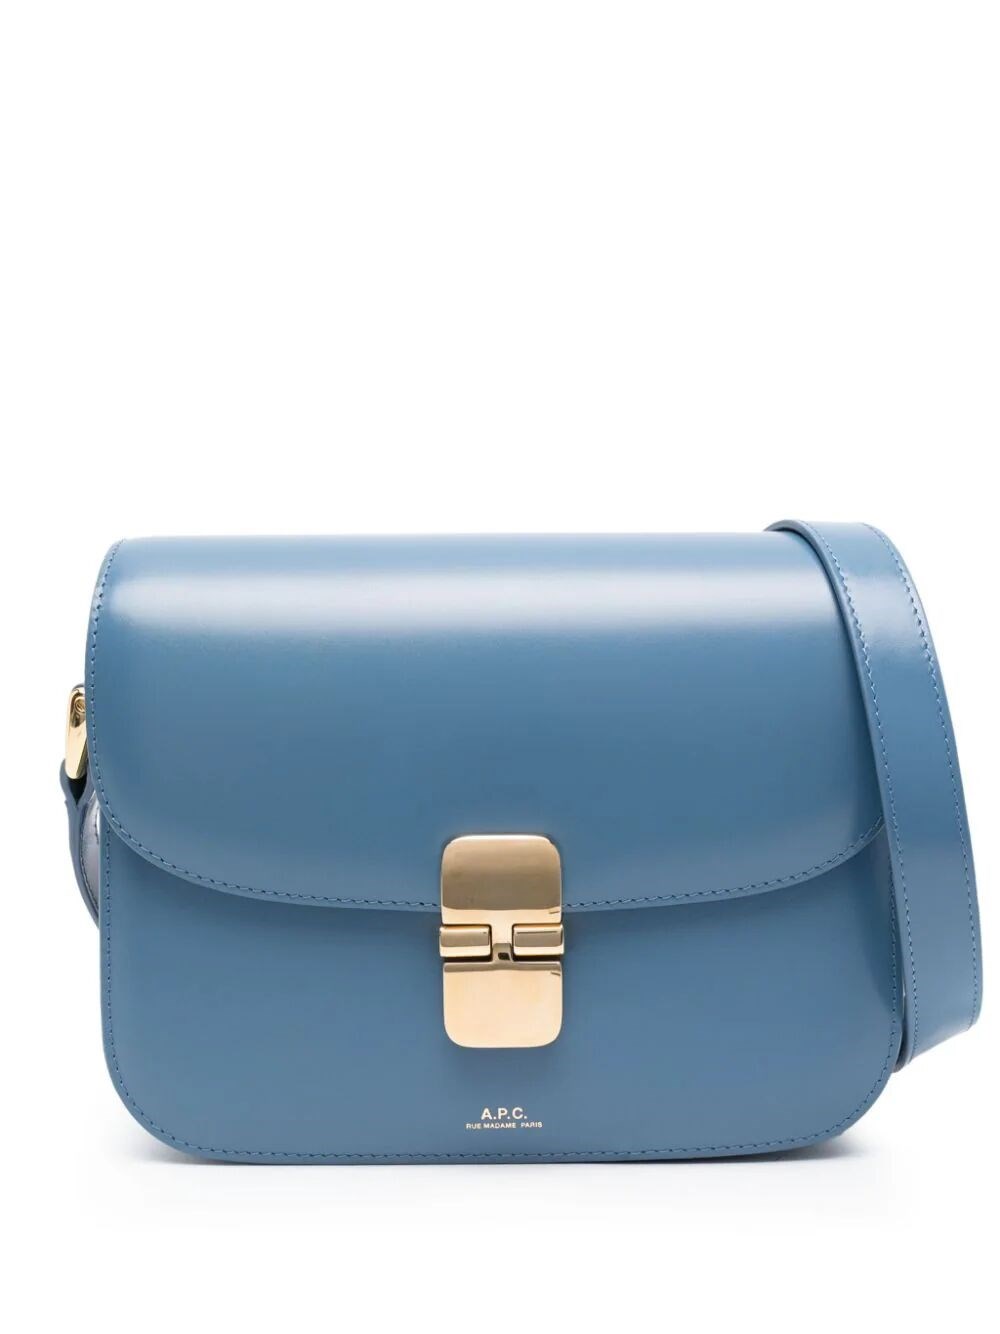 Apc Small Grace Shoulder Bag In Blue